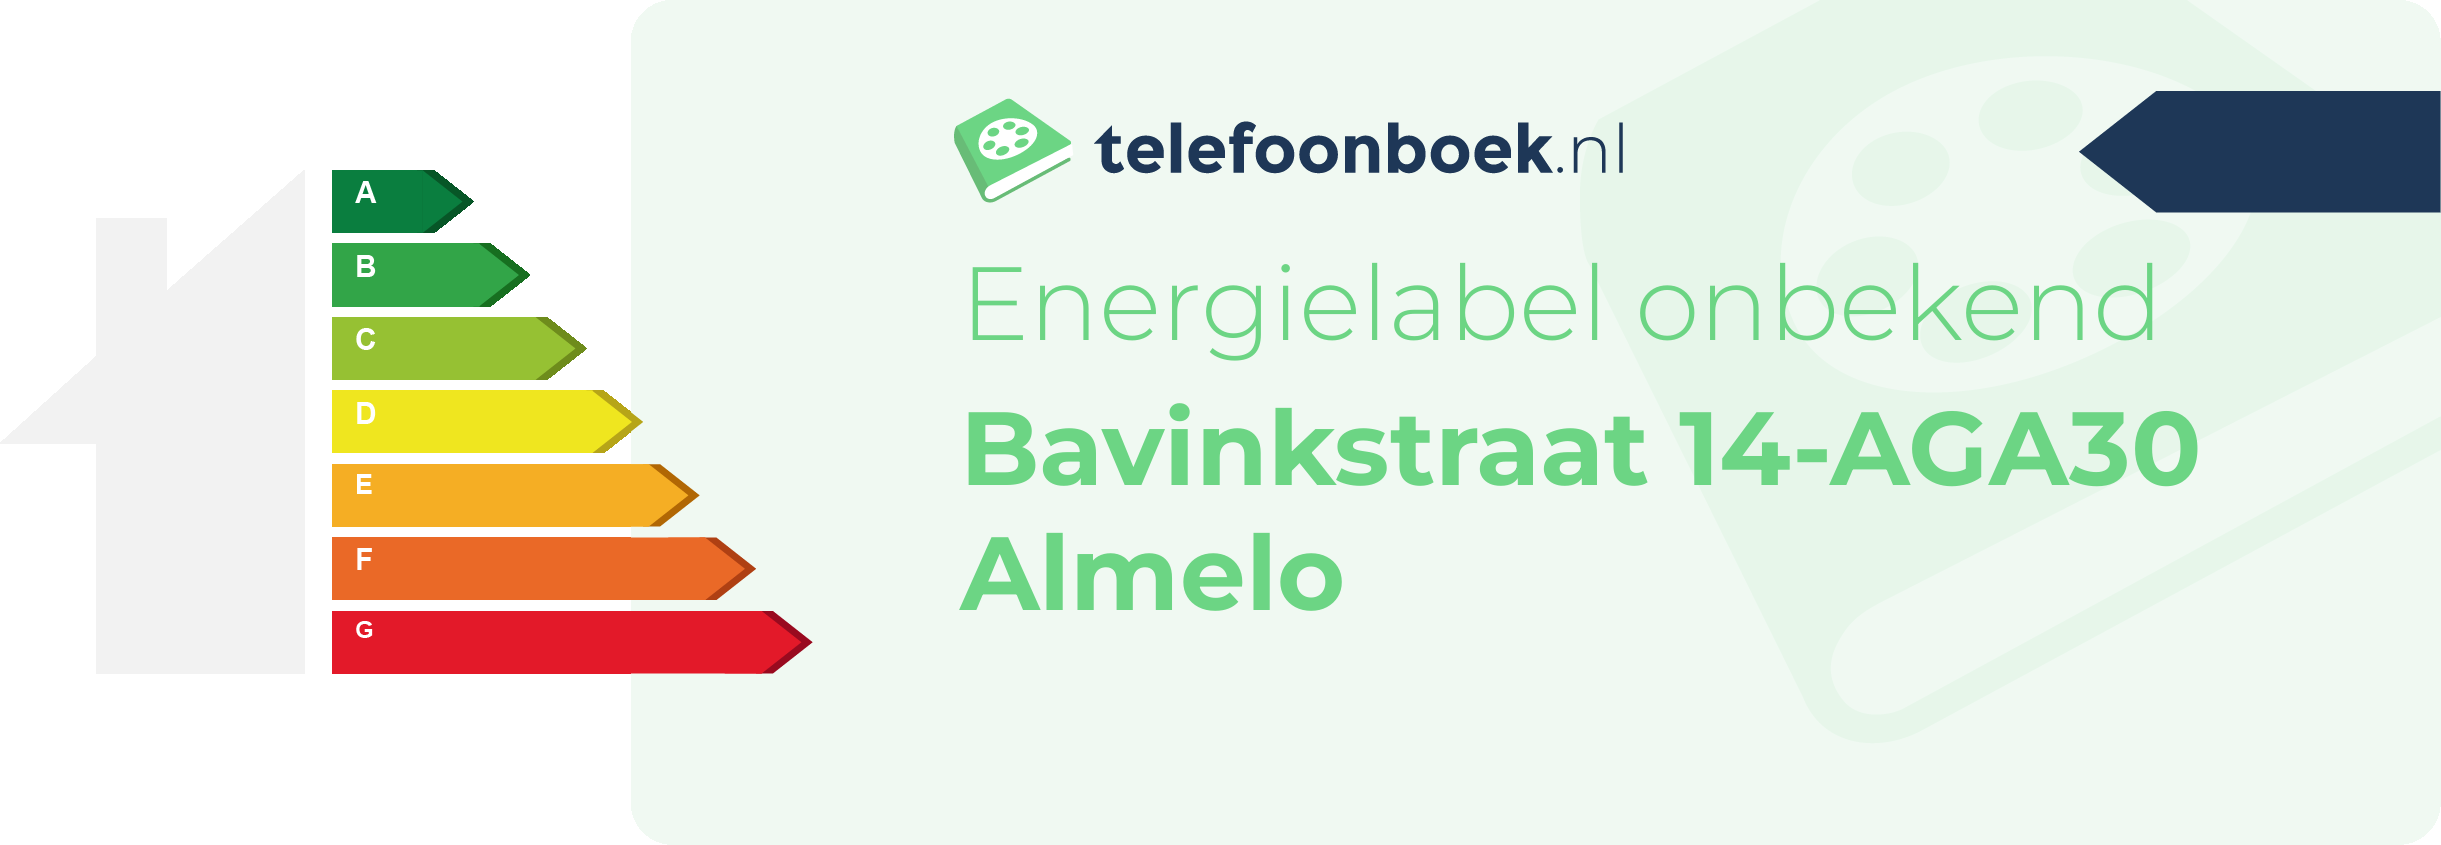 Energielabel Bavinkstraat 14-AGA30 Almelo